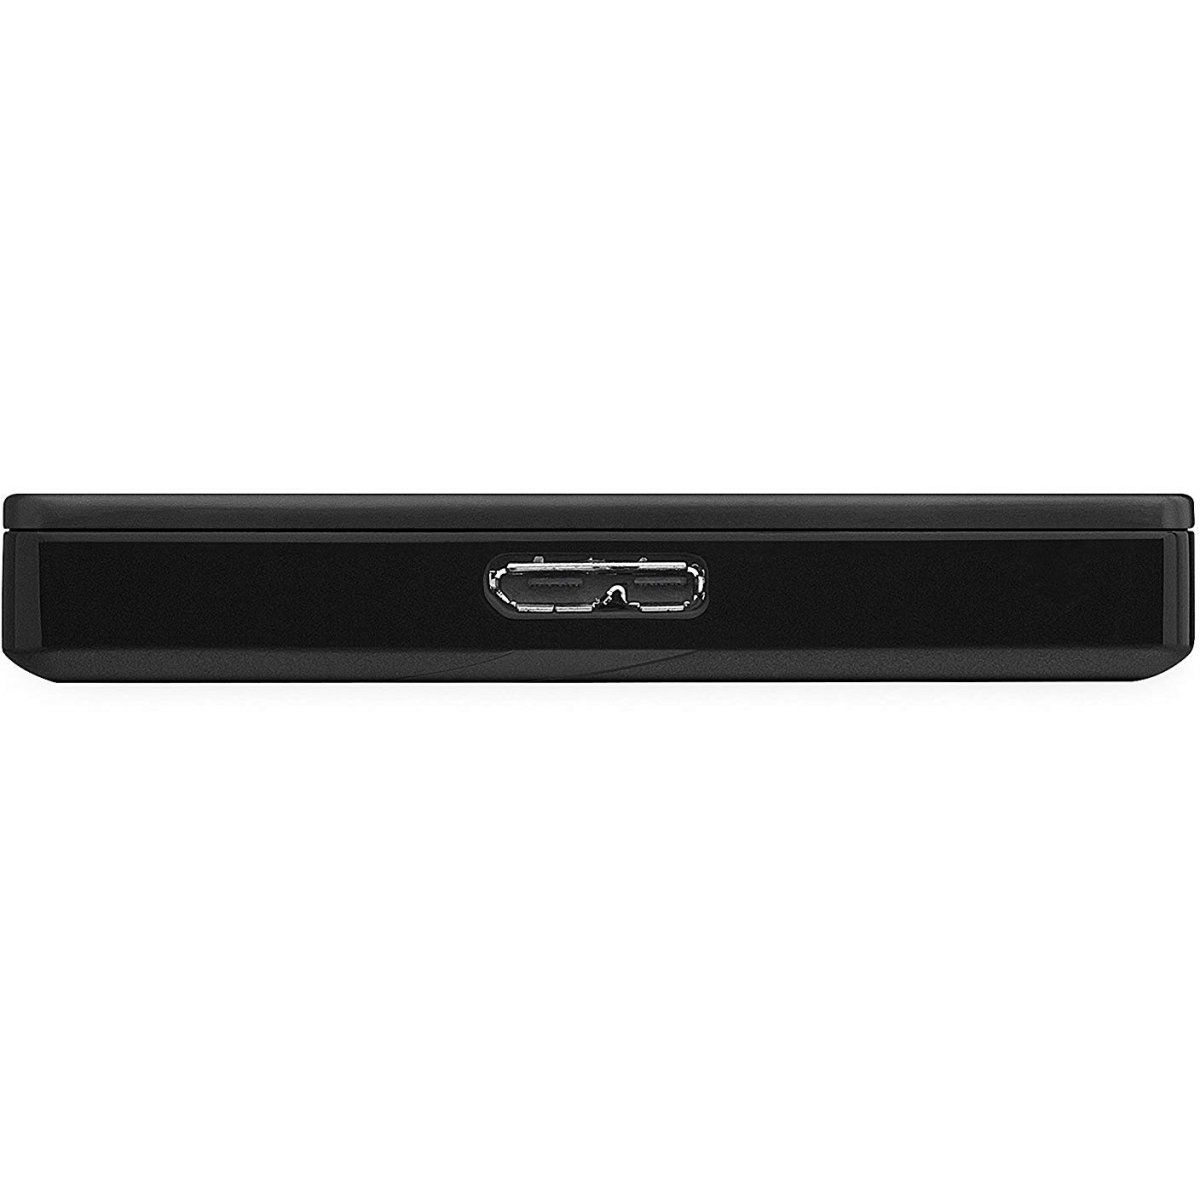 HD Externo Portátil Seagate Backup Plus SLim 2TB, USB 3.0, STDR2000100